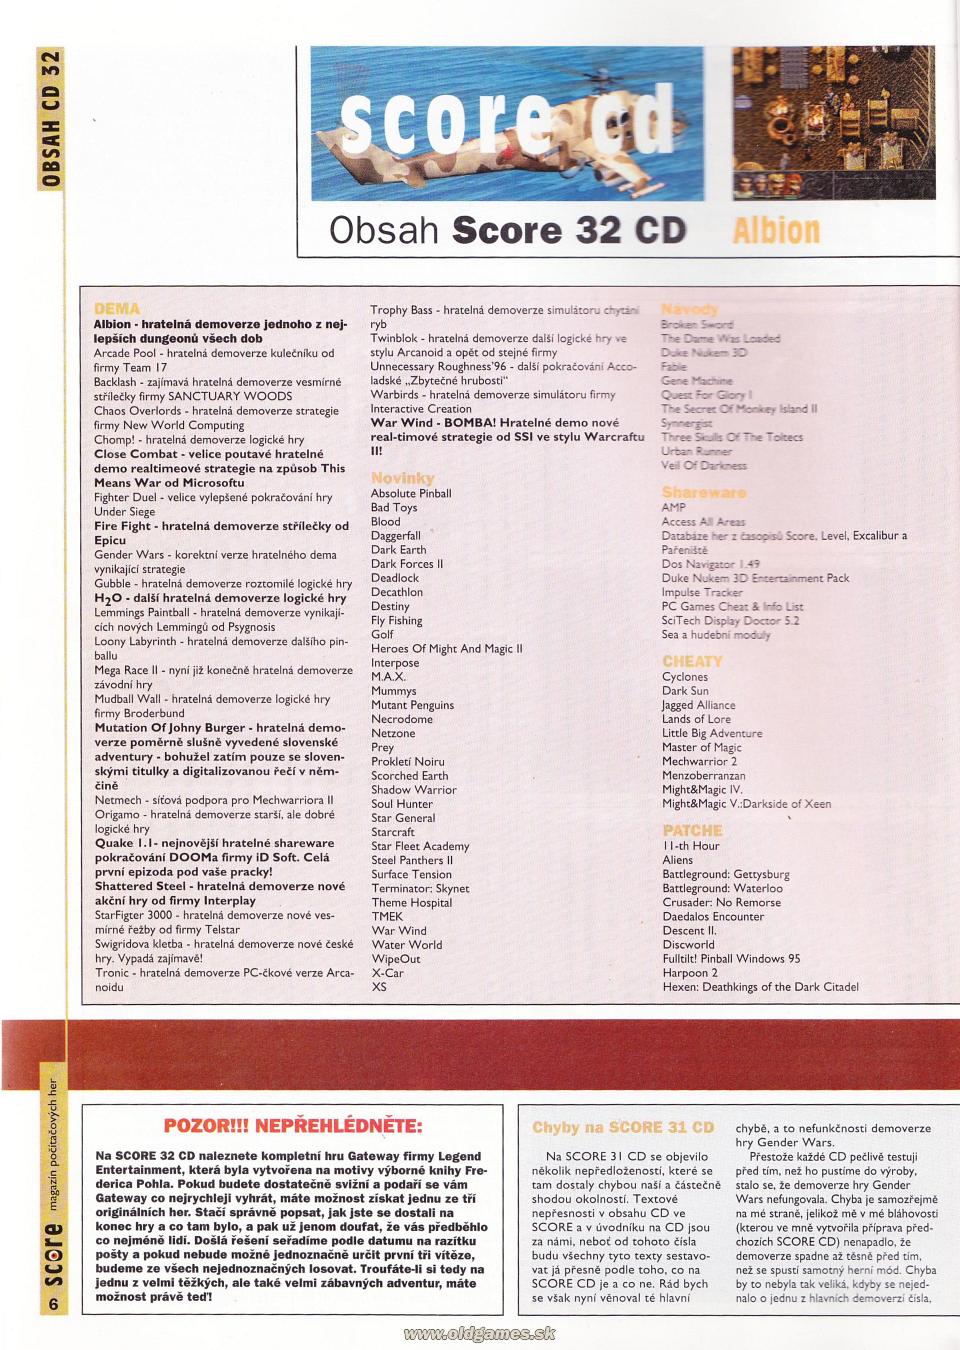 Obsah Score CD 32